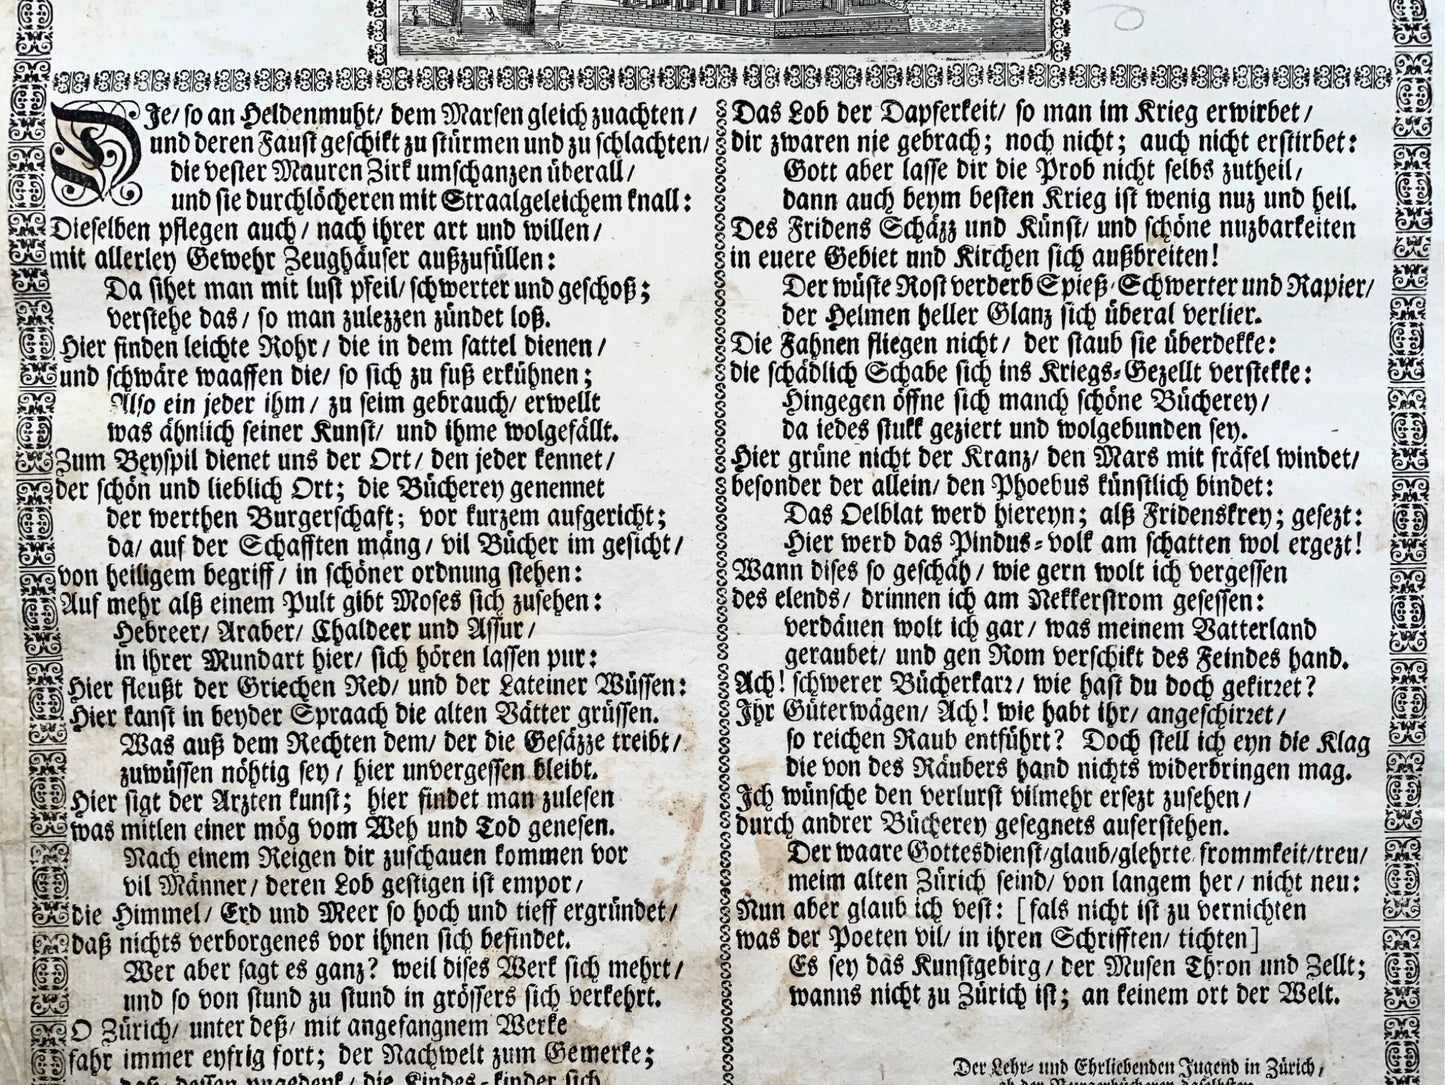 1661 Journal, Ode à la bibliothèque municipale, Zurich, Suisse, bibliothécographie